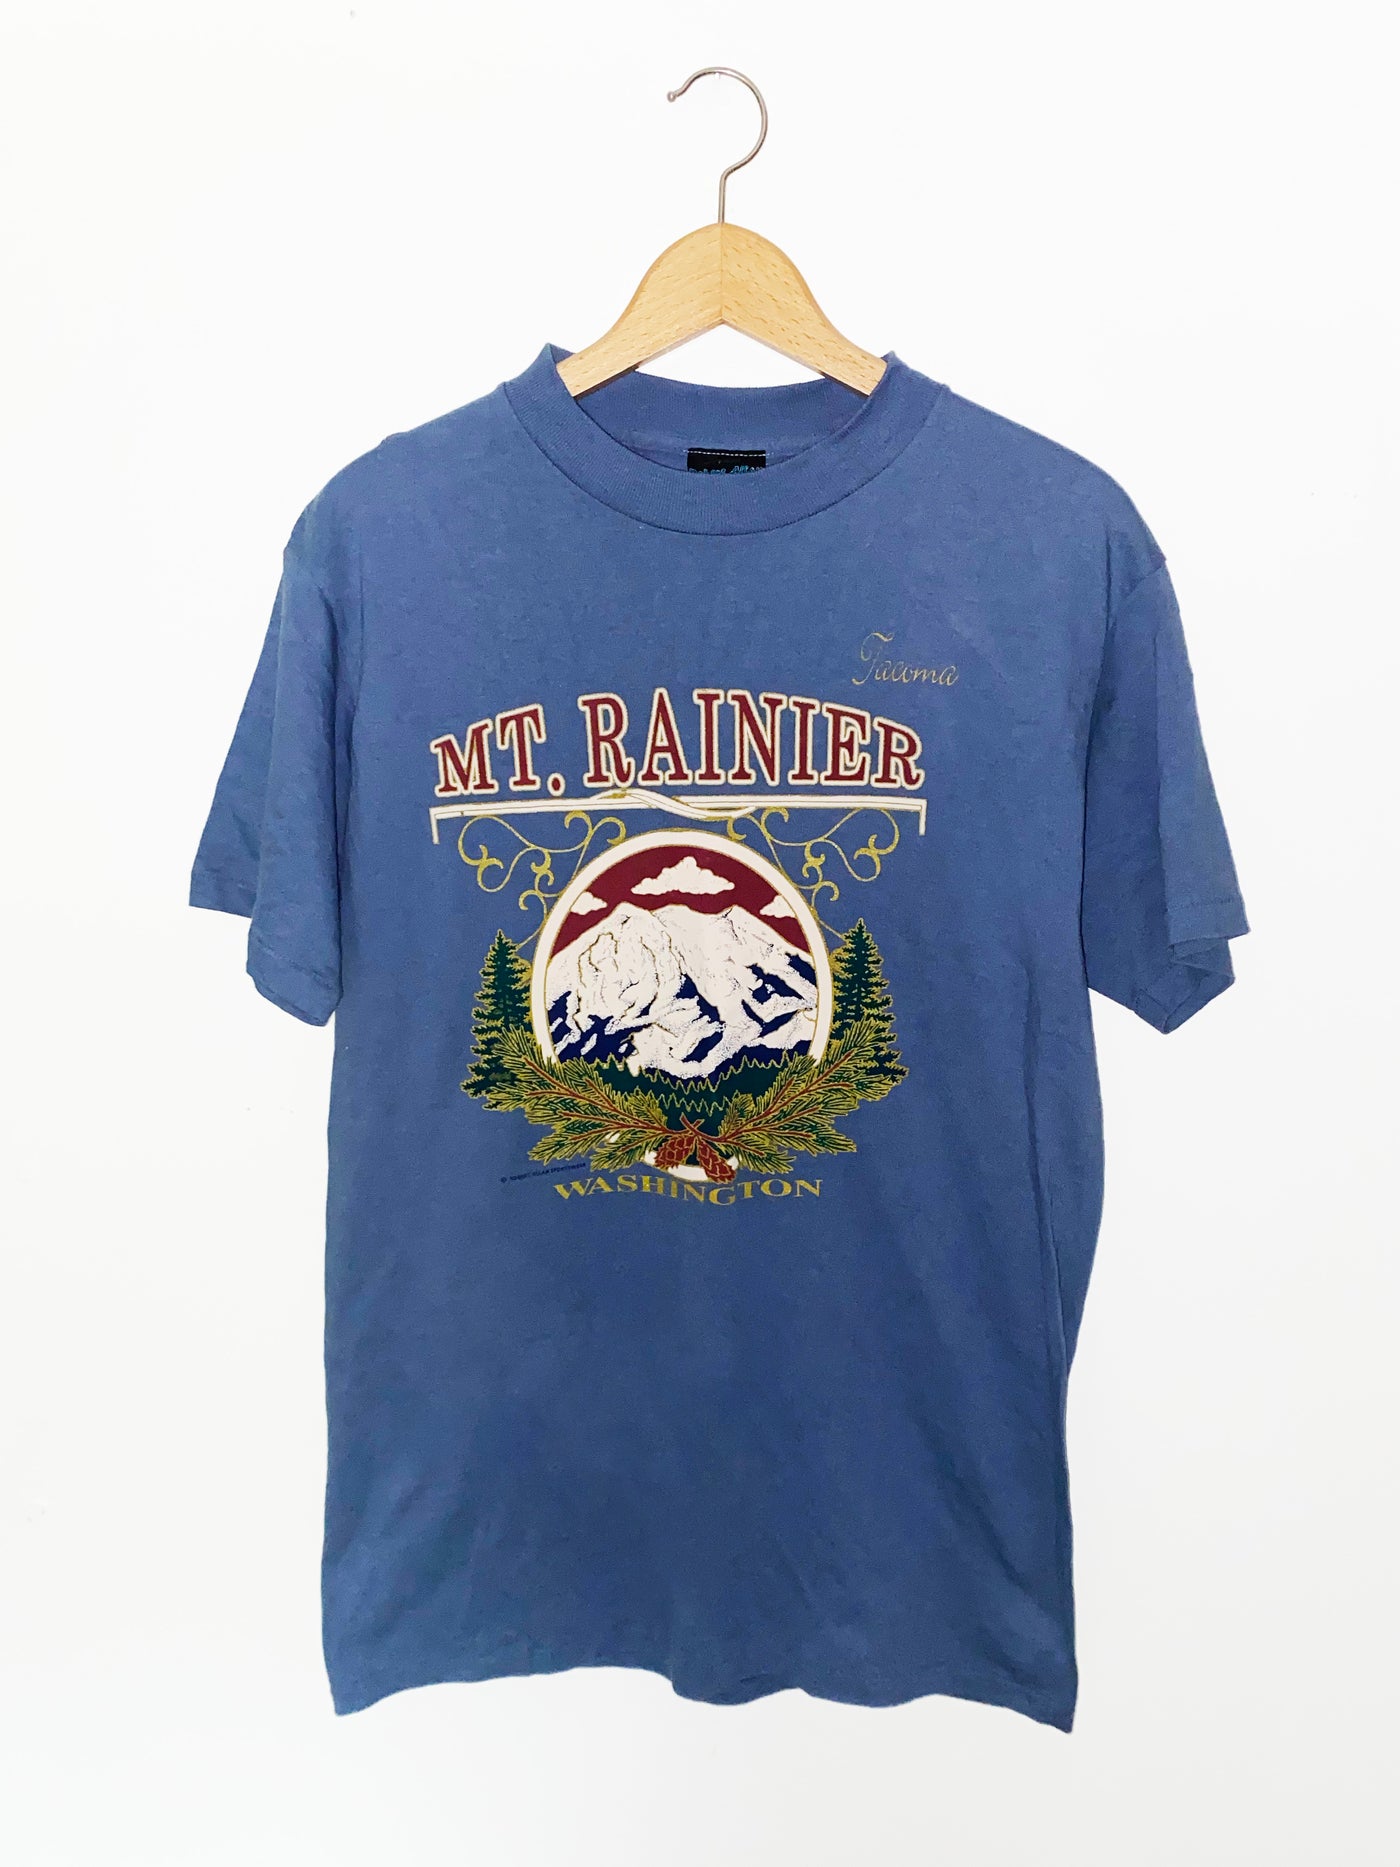 Vintage 90s Mt. Rainier, Washington T-Shirt